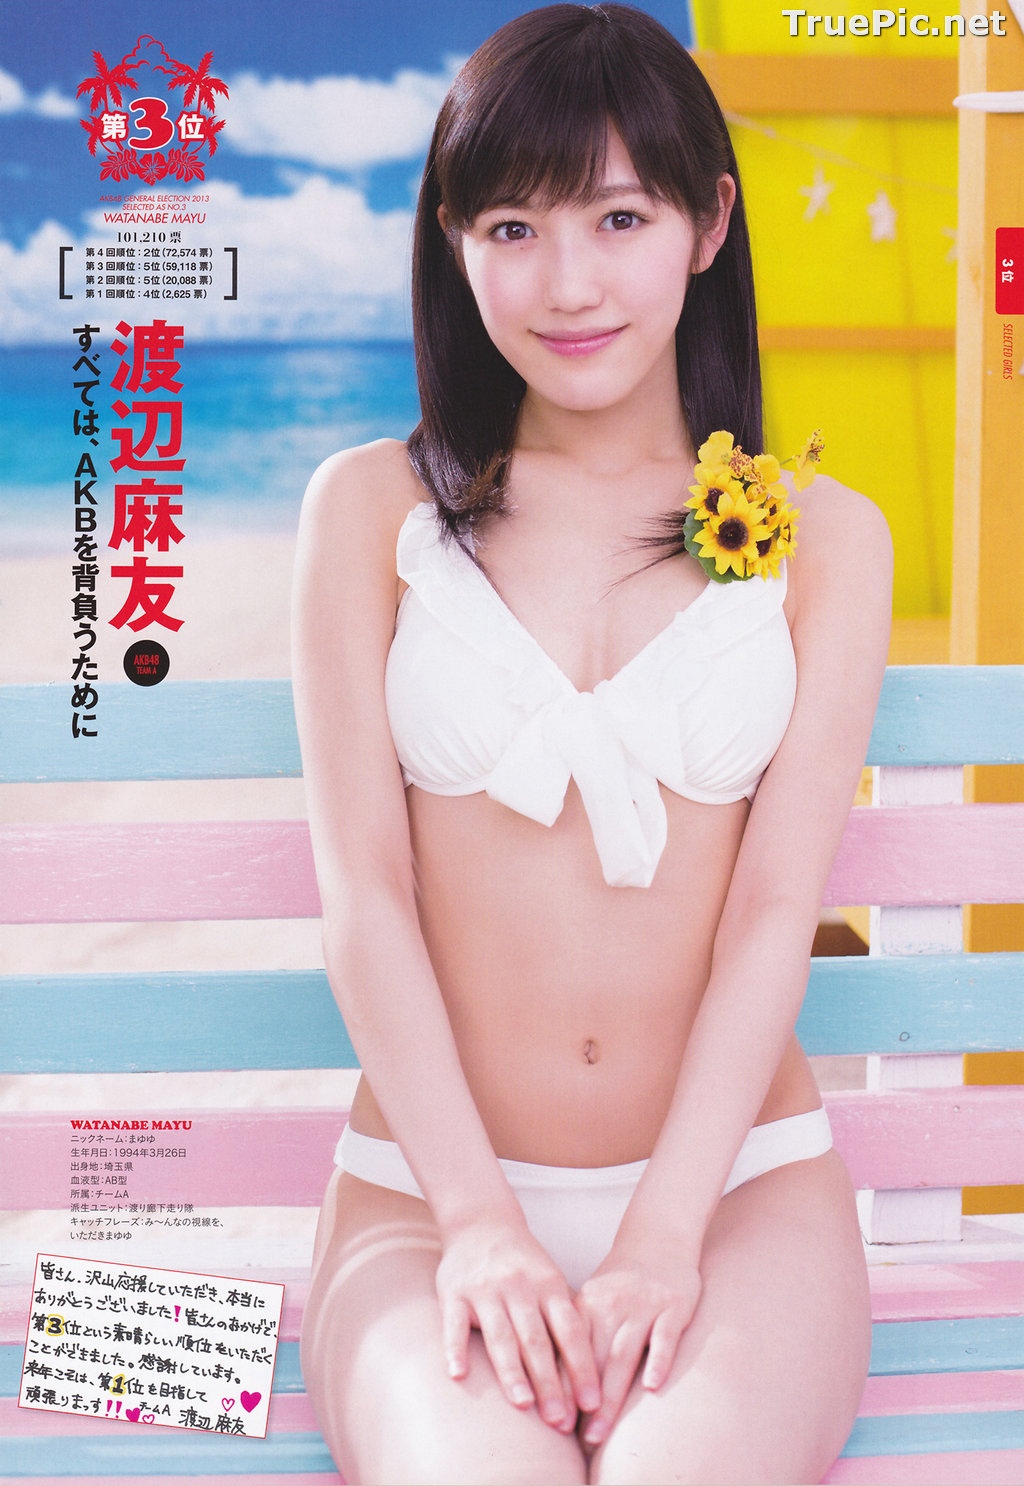 Image AKB48 General Election! Swimsuit Surprise Announcement 2013 - TruePic.net - Picture-19